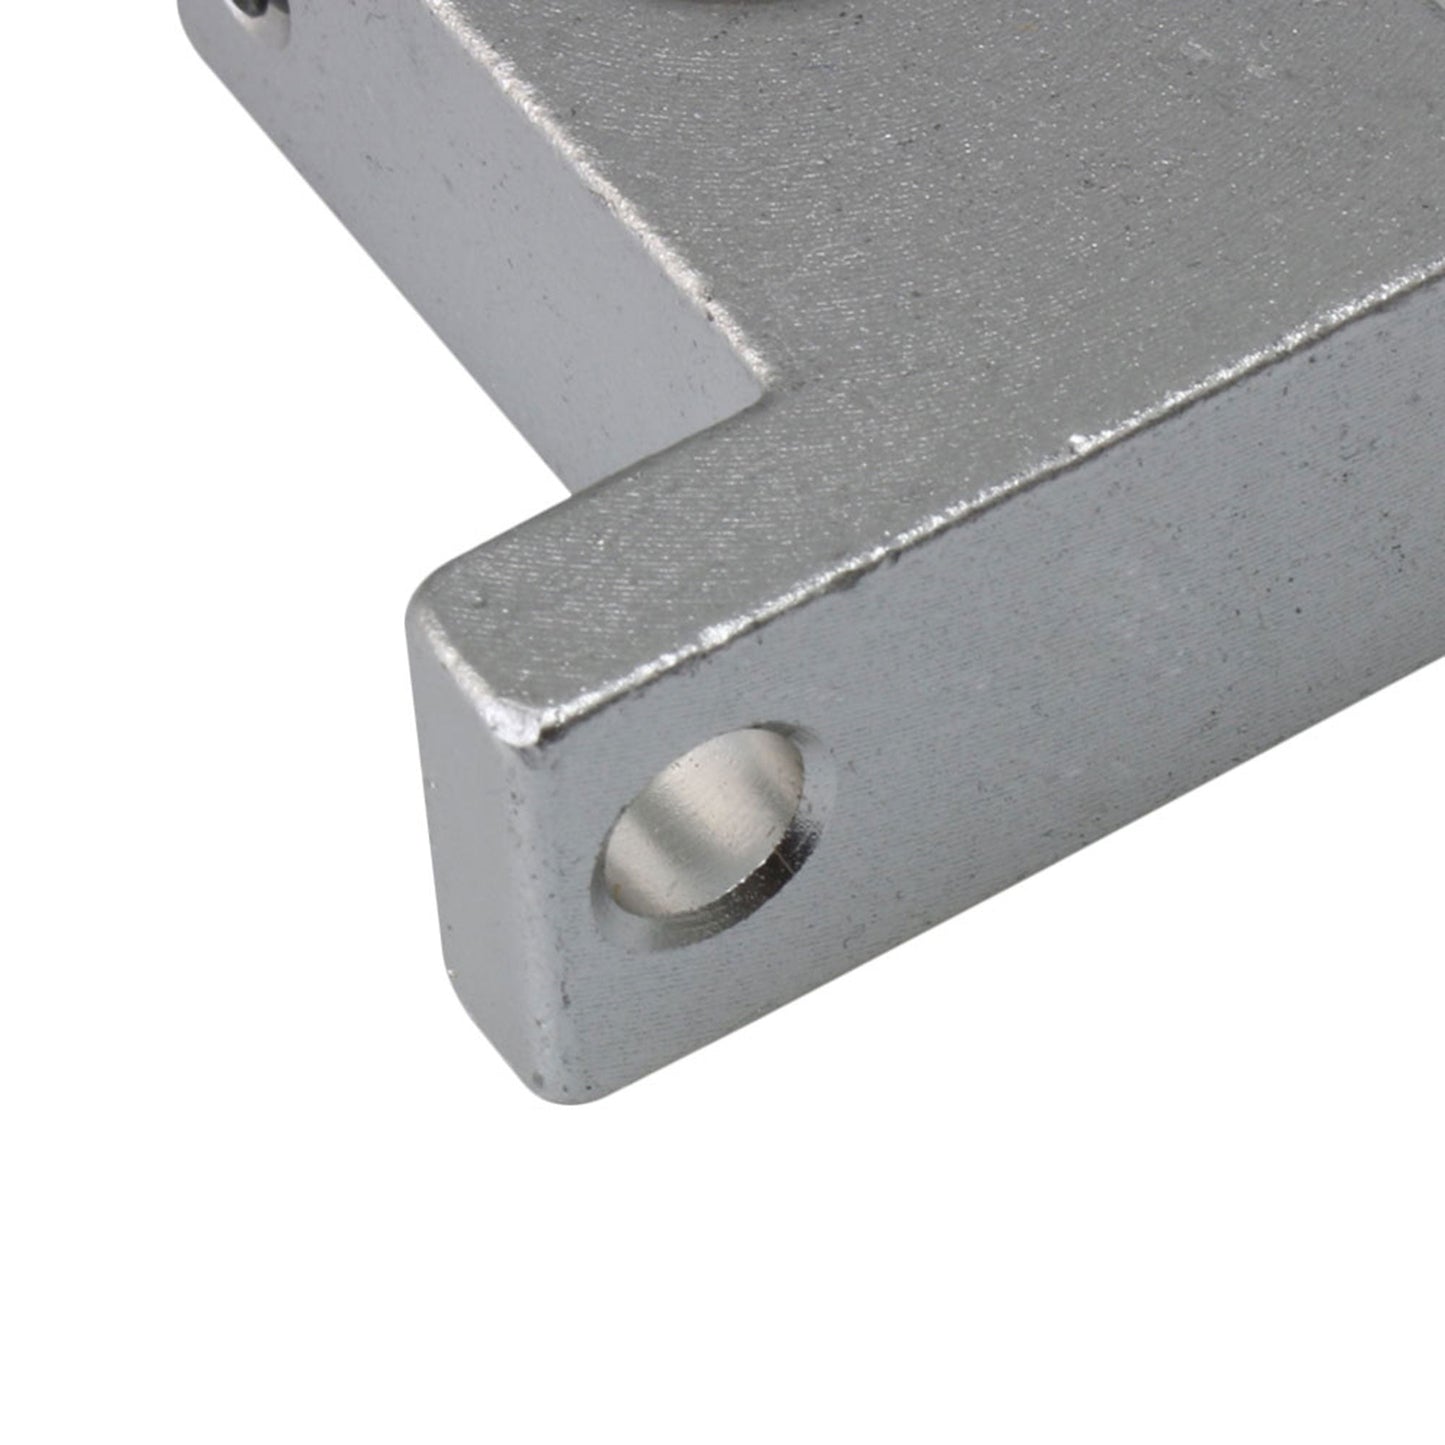 BQLZR Silver Aluminum Linear Rail Bearings Shaft Guide Support Bracket SK13 Pack of 2